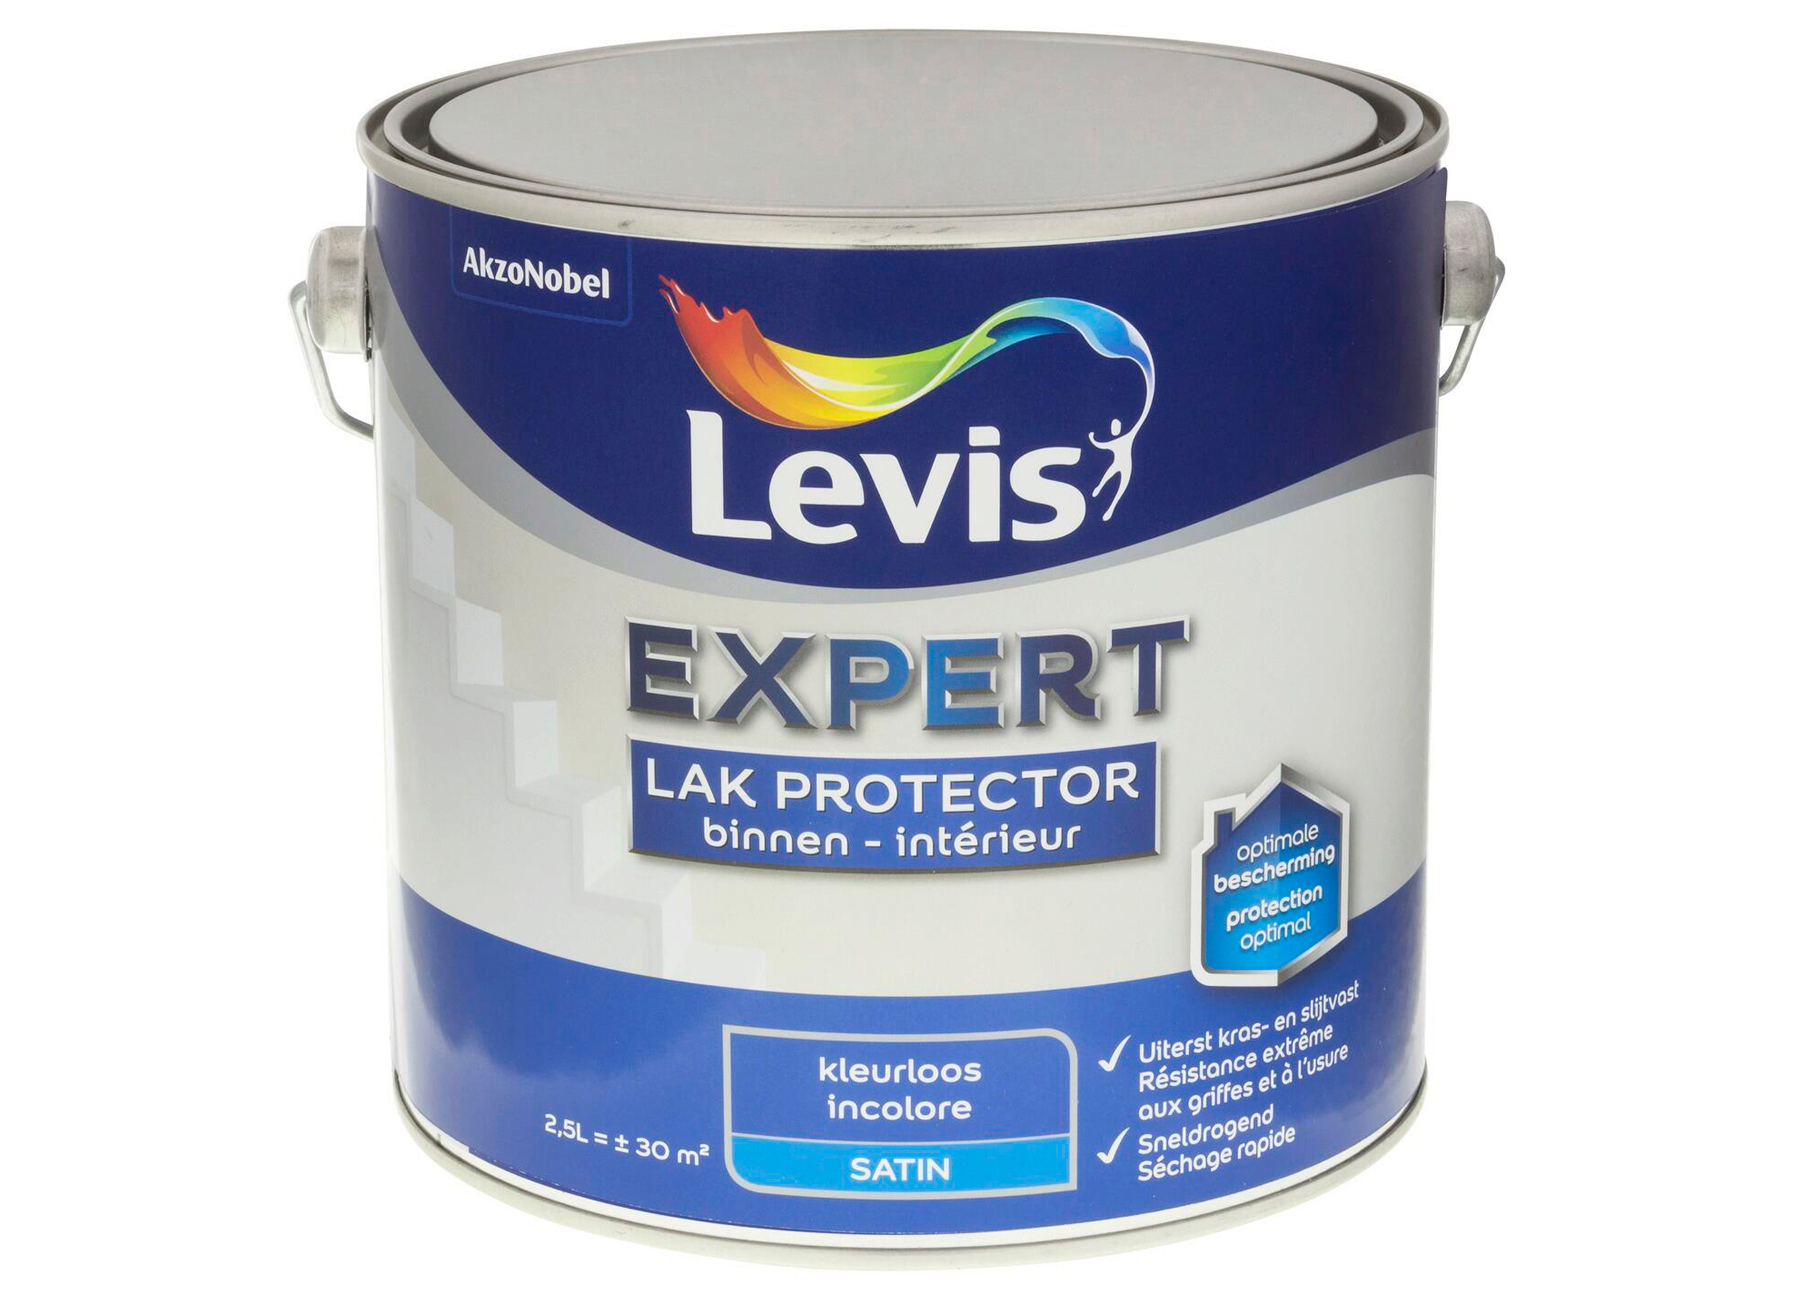 LEVIS EXPERT LAK PROTECTOR